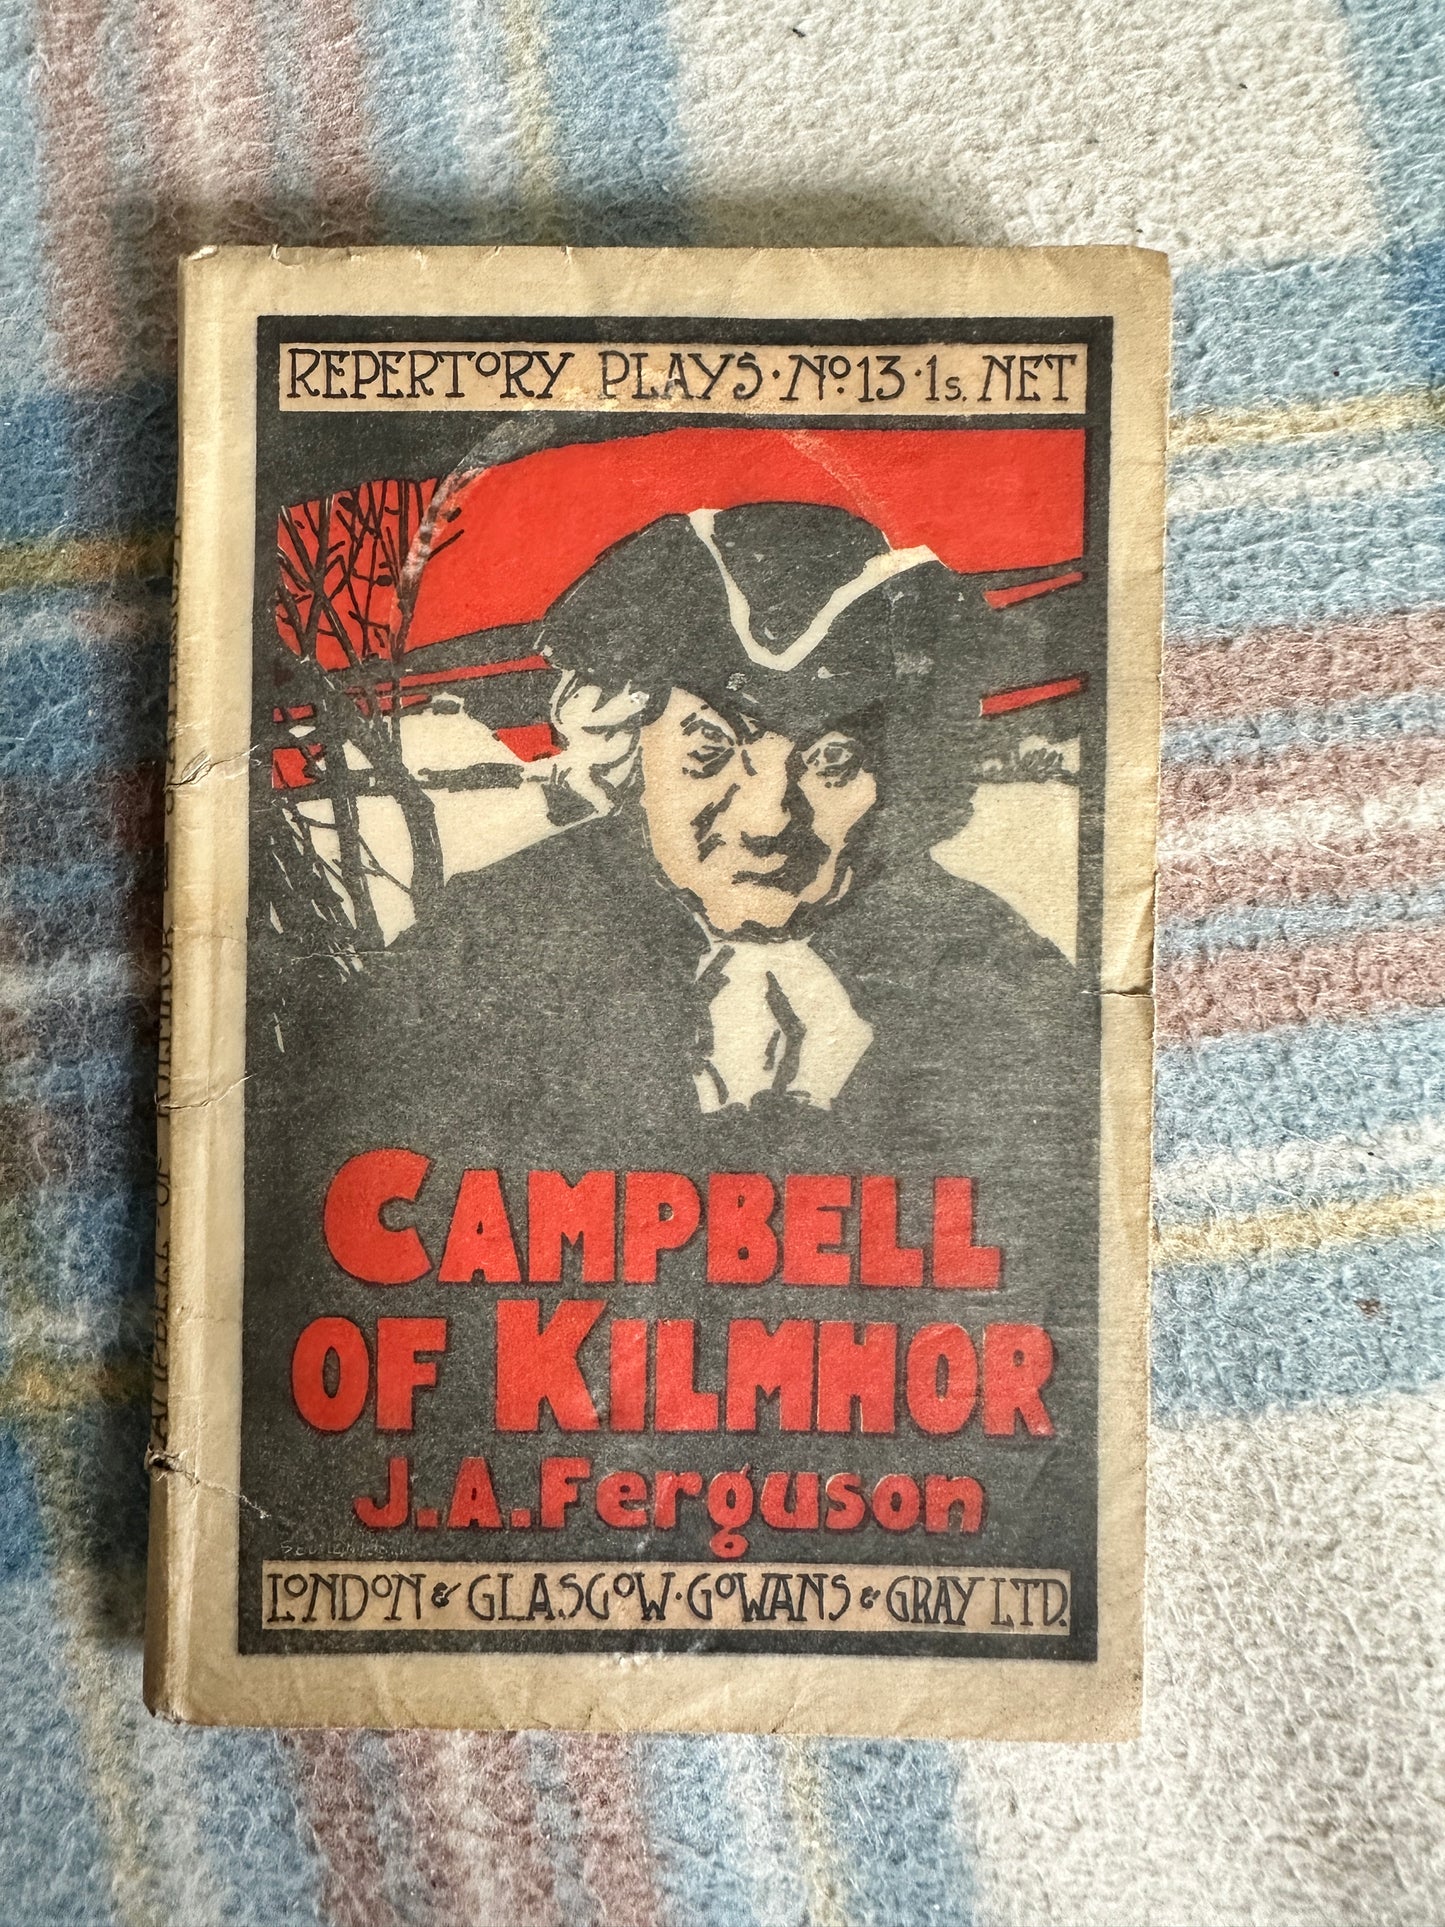 1930 Campbell Of Kilmhor(Rep Plays No3) J. A. Ferguson(Gowans & Gray Ltd Publishing)